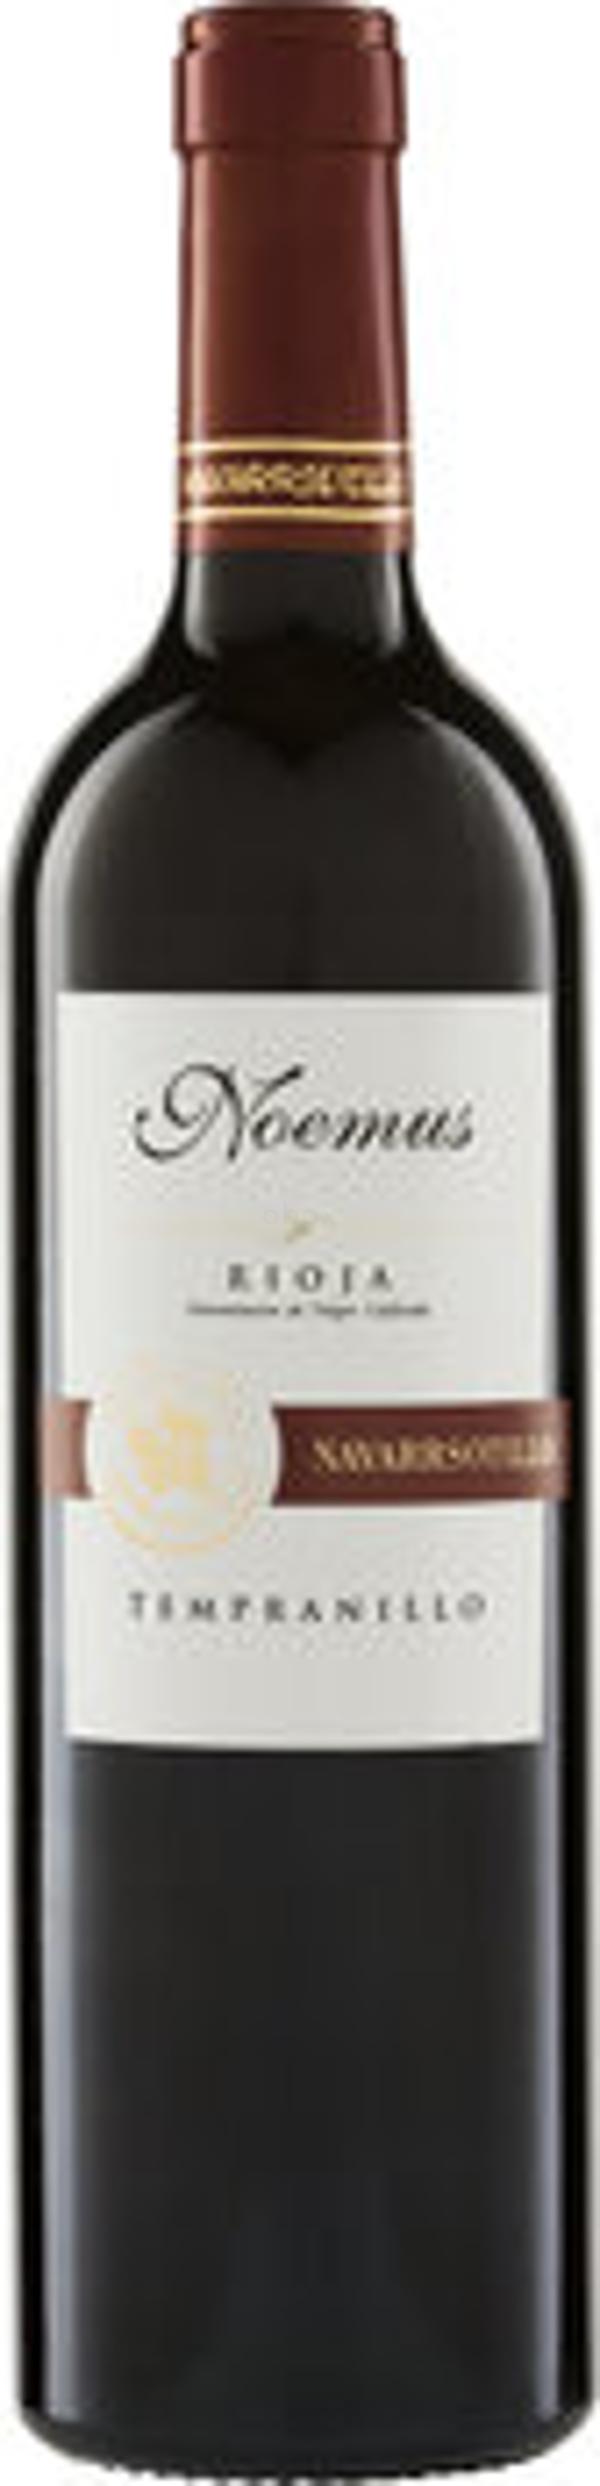 Produktfoto zu Rioja DOC Noemus rot 2020, 0,75l